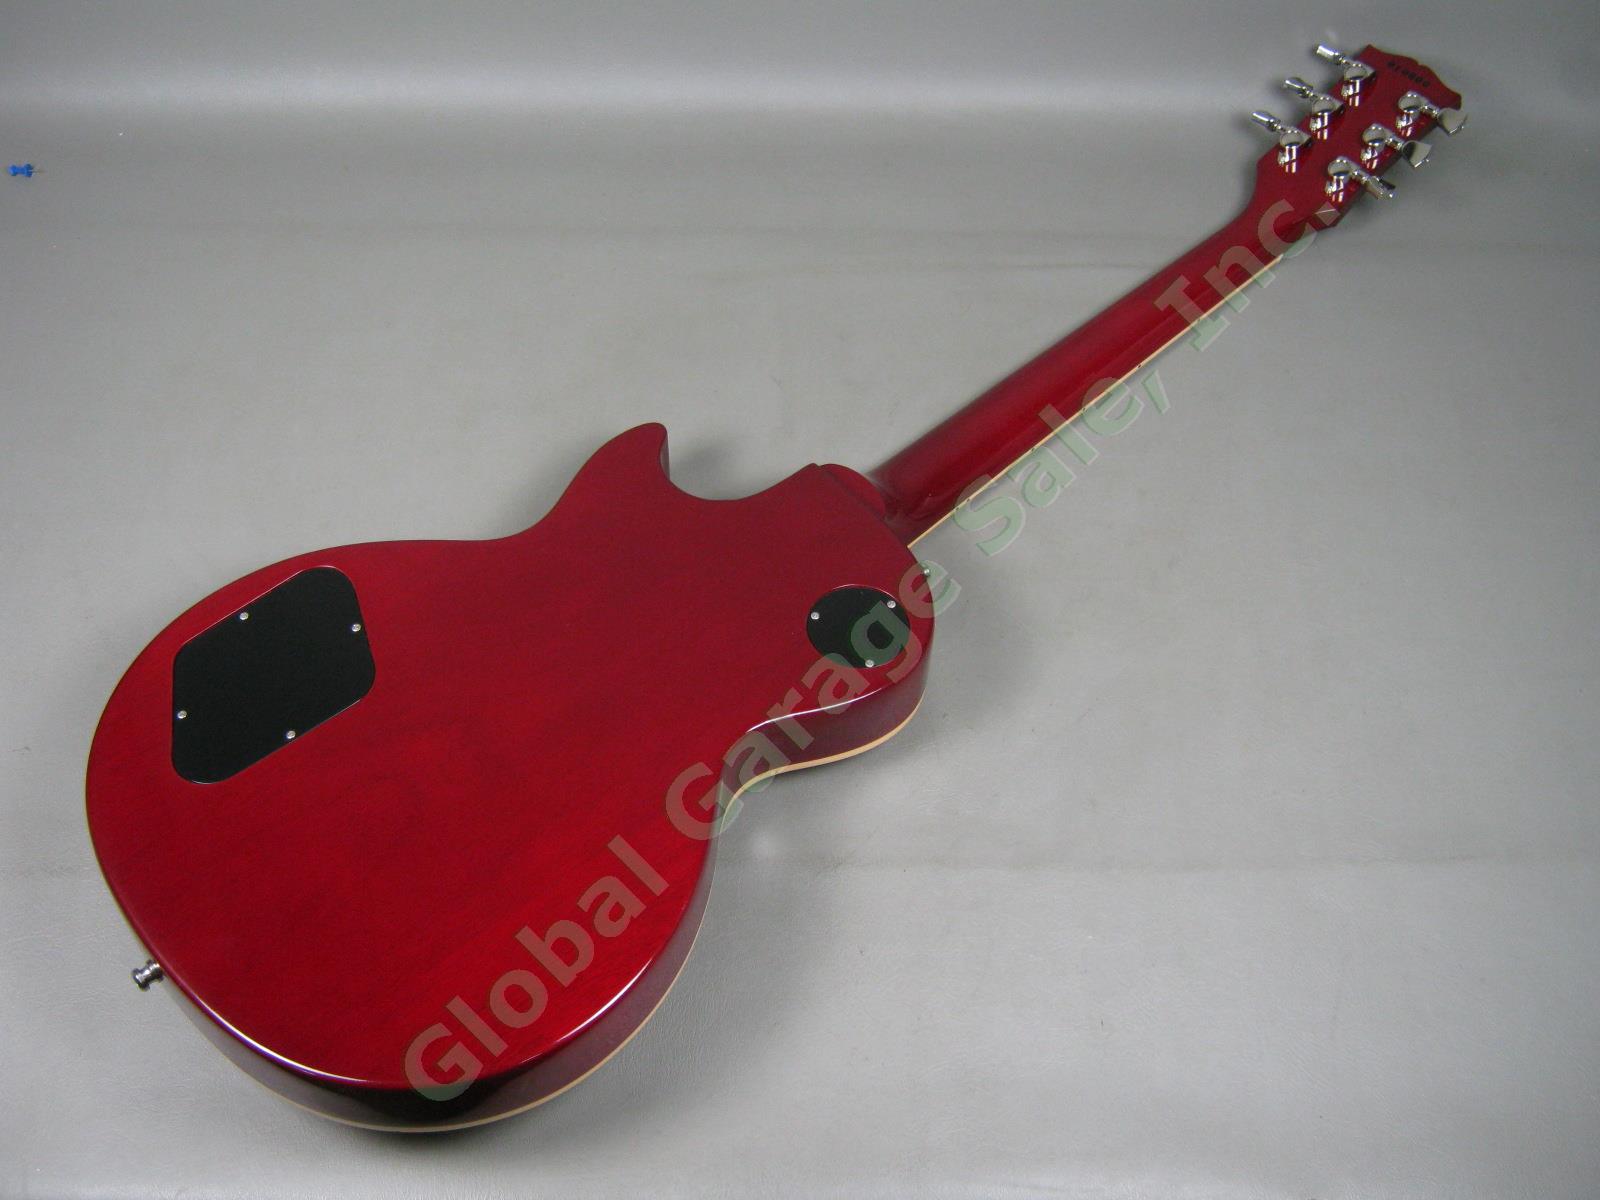 MINT! 2001 Gibson Les Paul Classic 1960 Reissue Sunburst Guitar One Owner w/Case 16